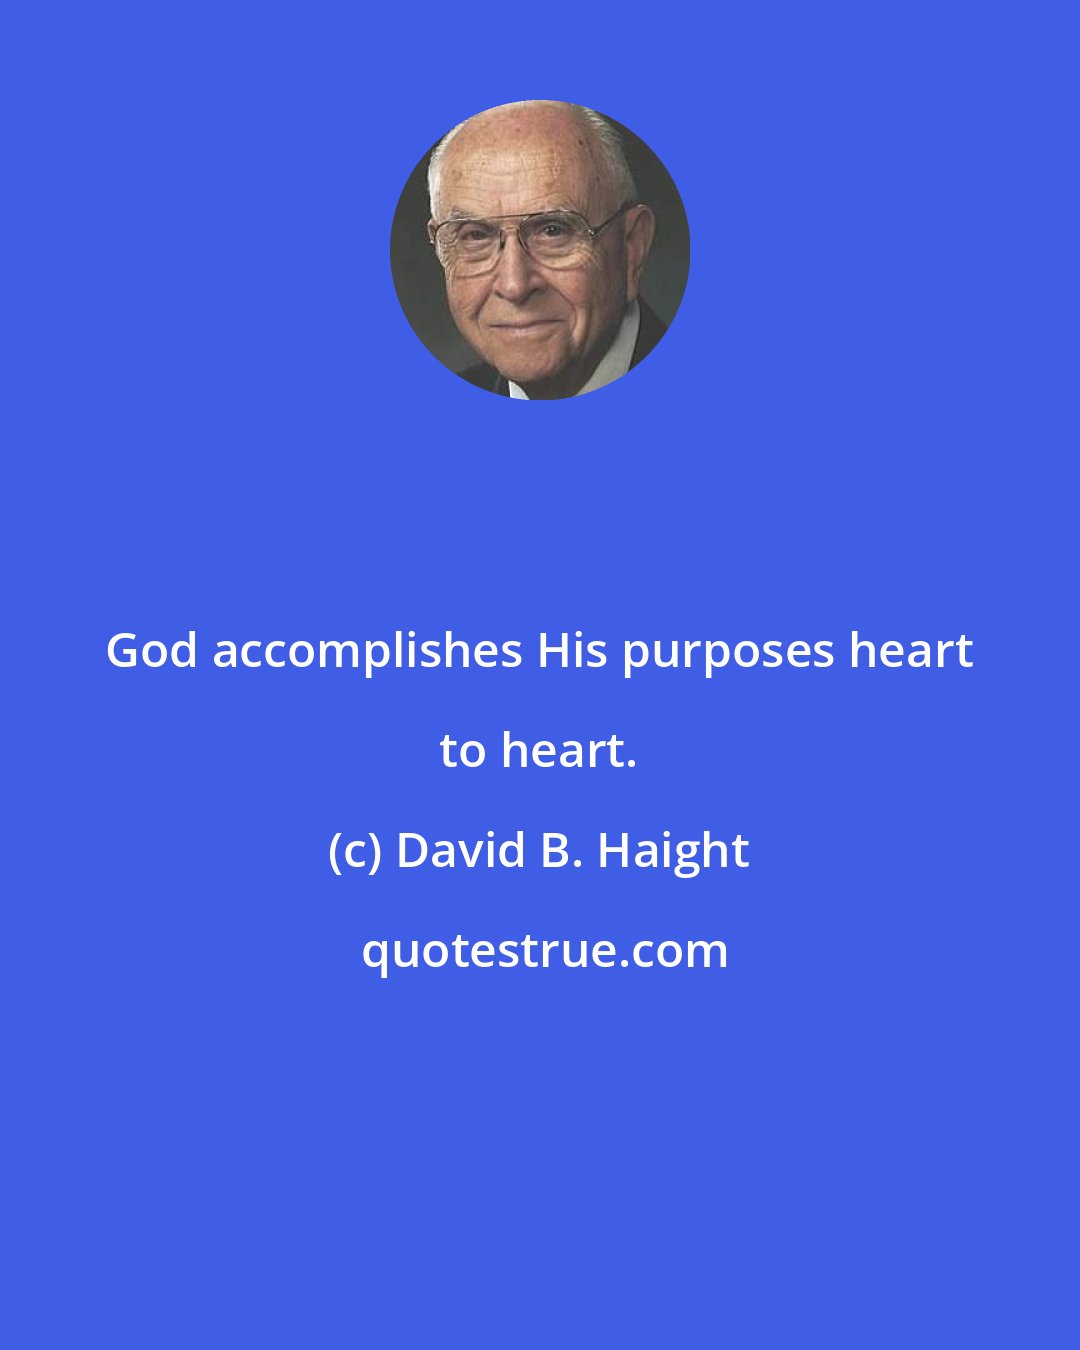 David B. Haight: God accomplishes His purposes heart to heart.